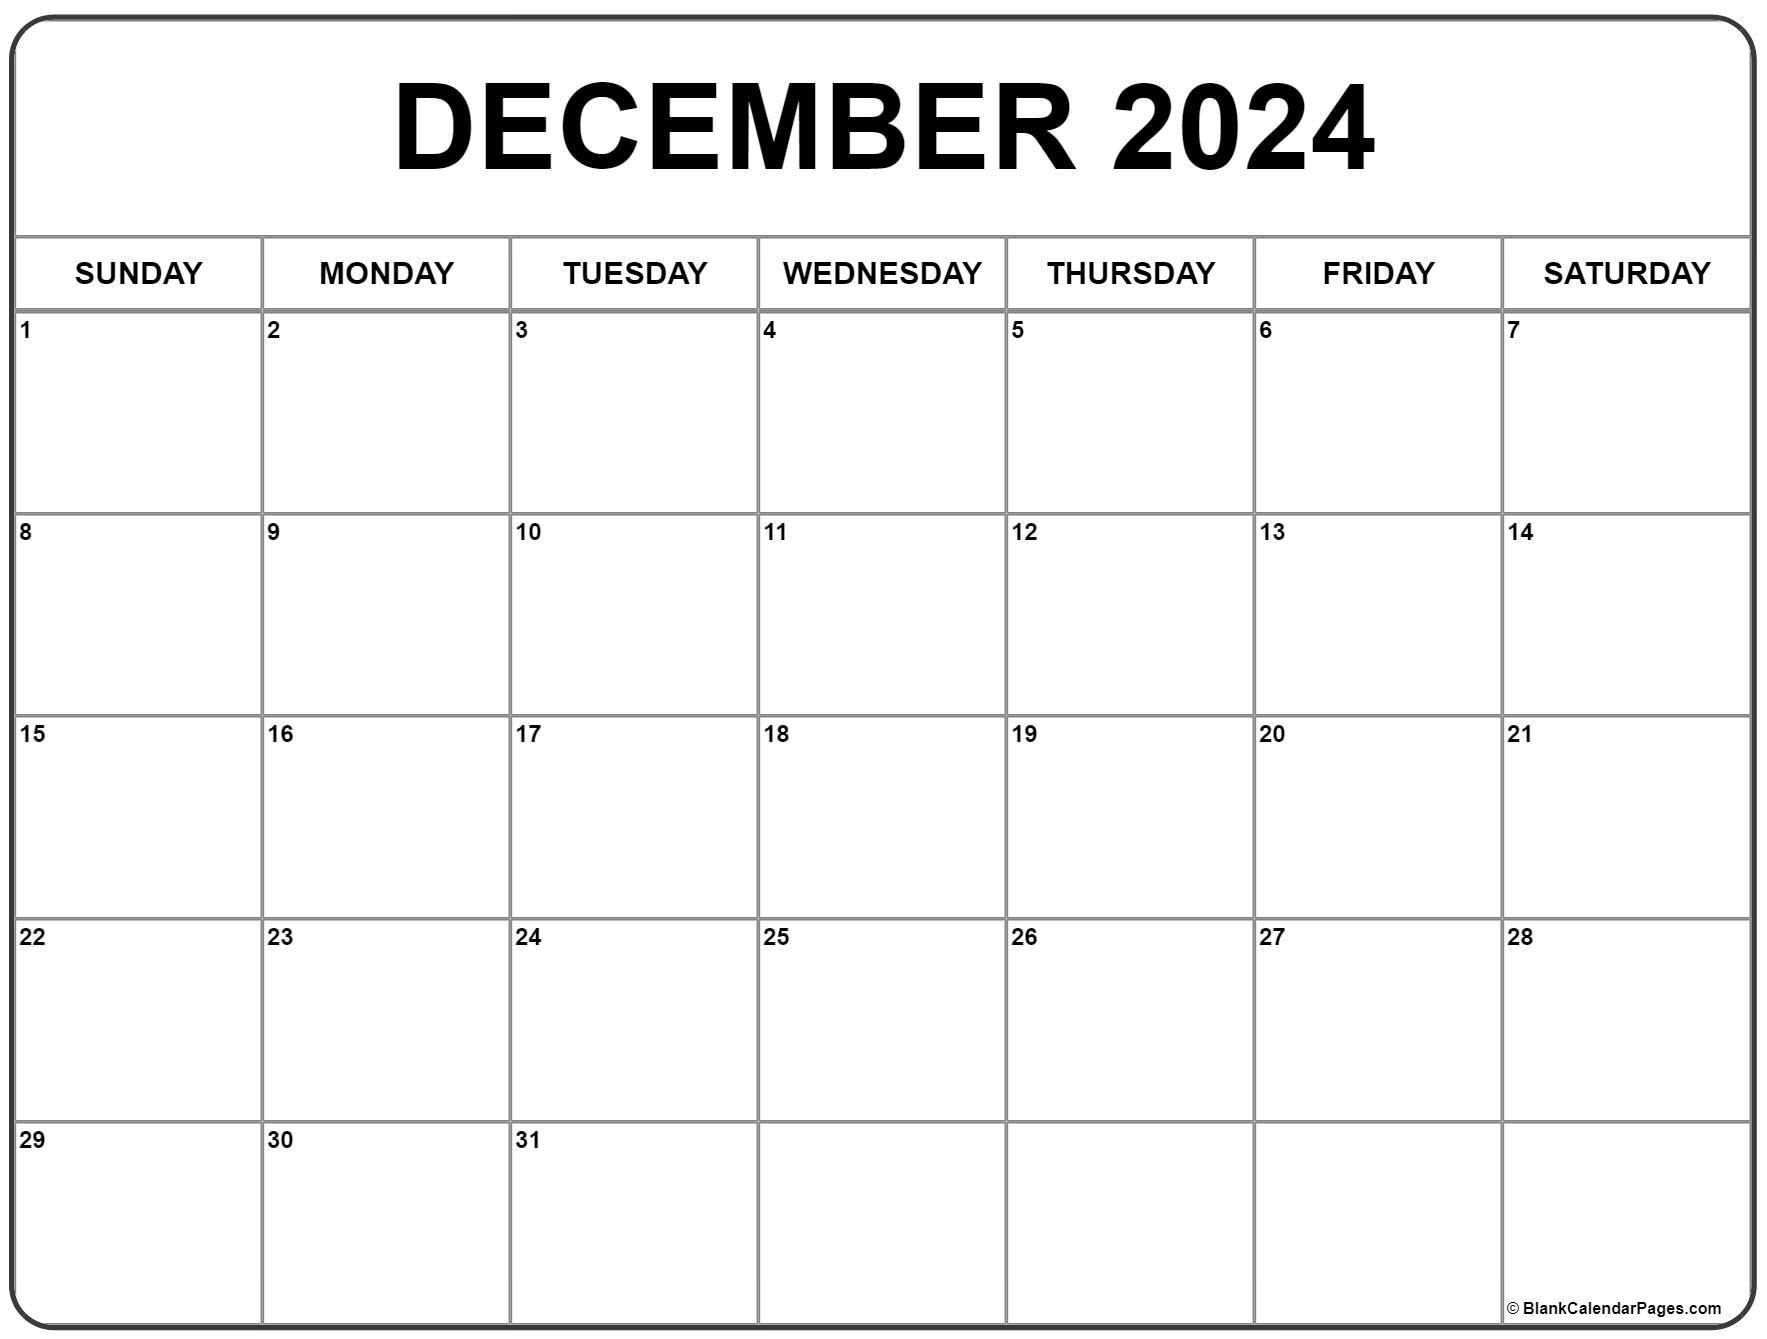 December 2024 Calendar | Free Printable Calendar for 2024 Calendar Printable December